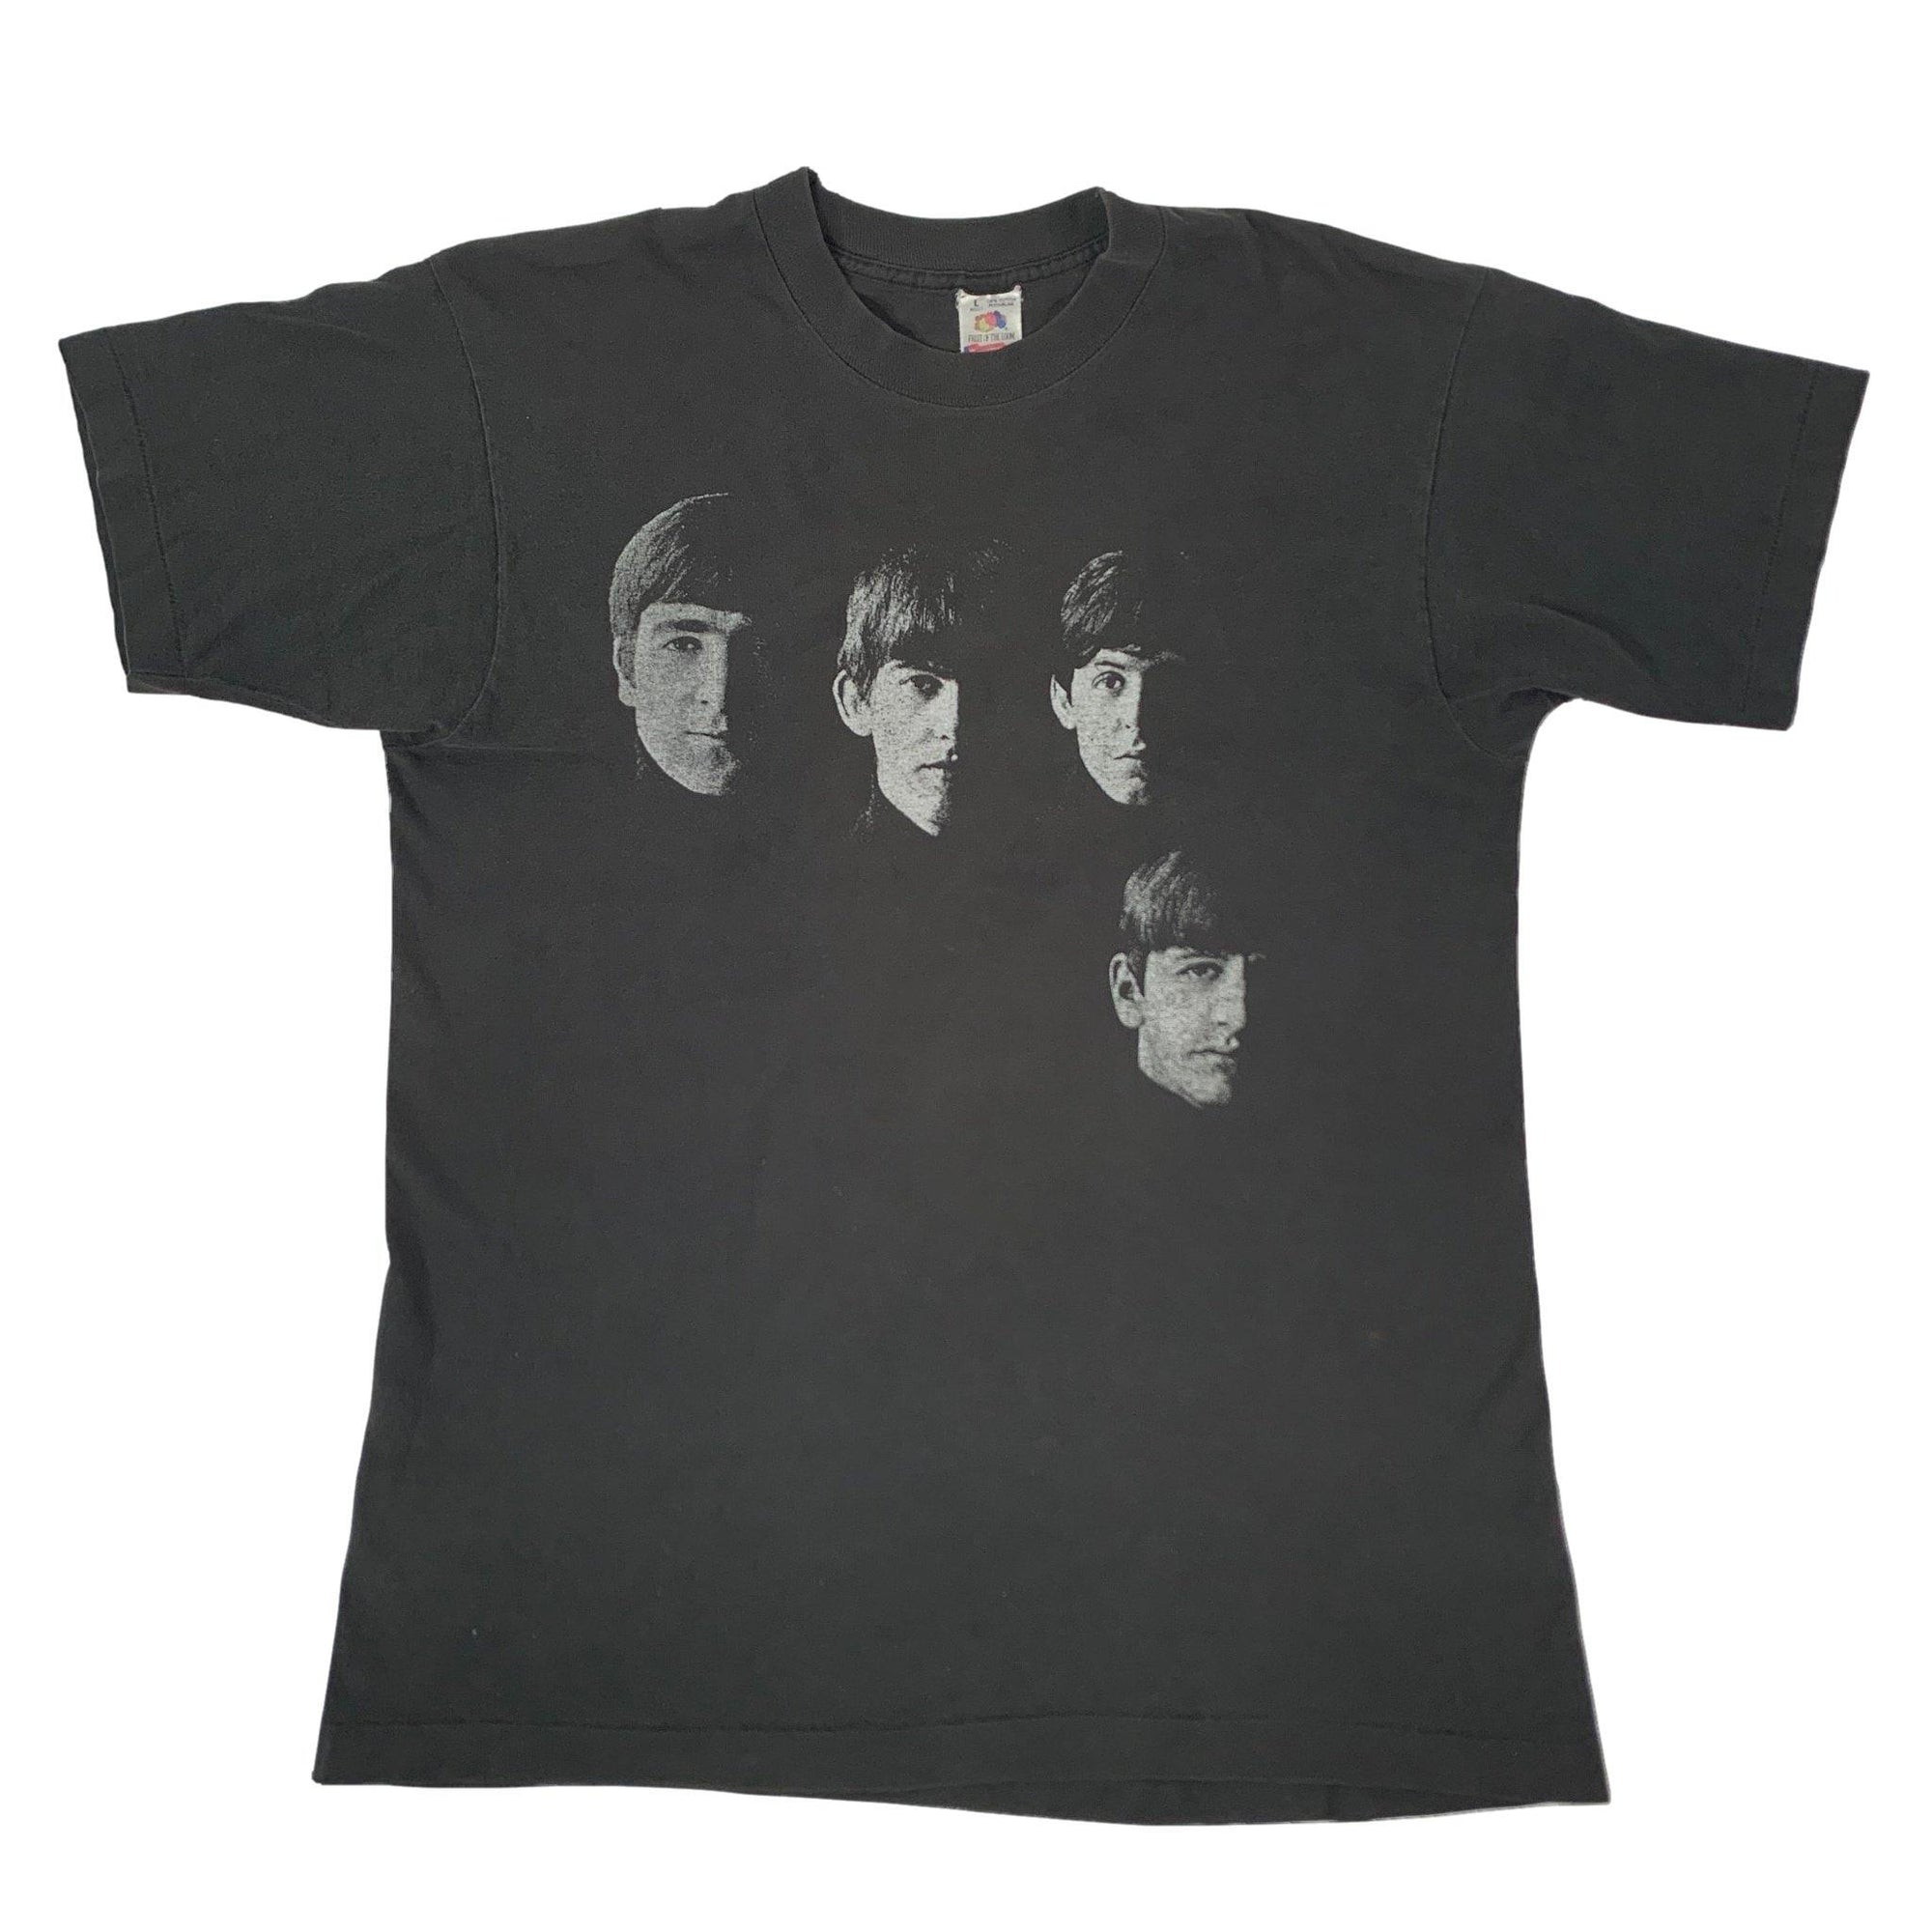 Vintage The Beatles "Apple Corps" T-Shirt - jointcustodydc